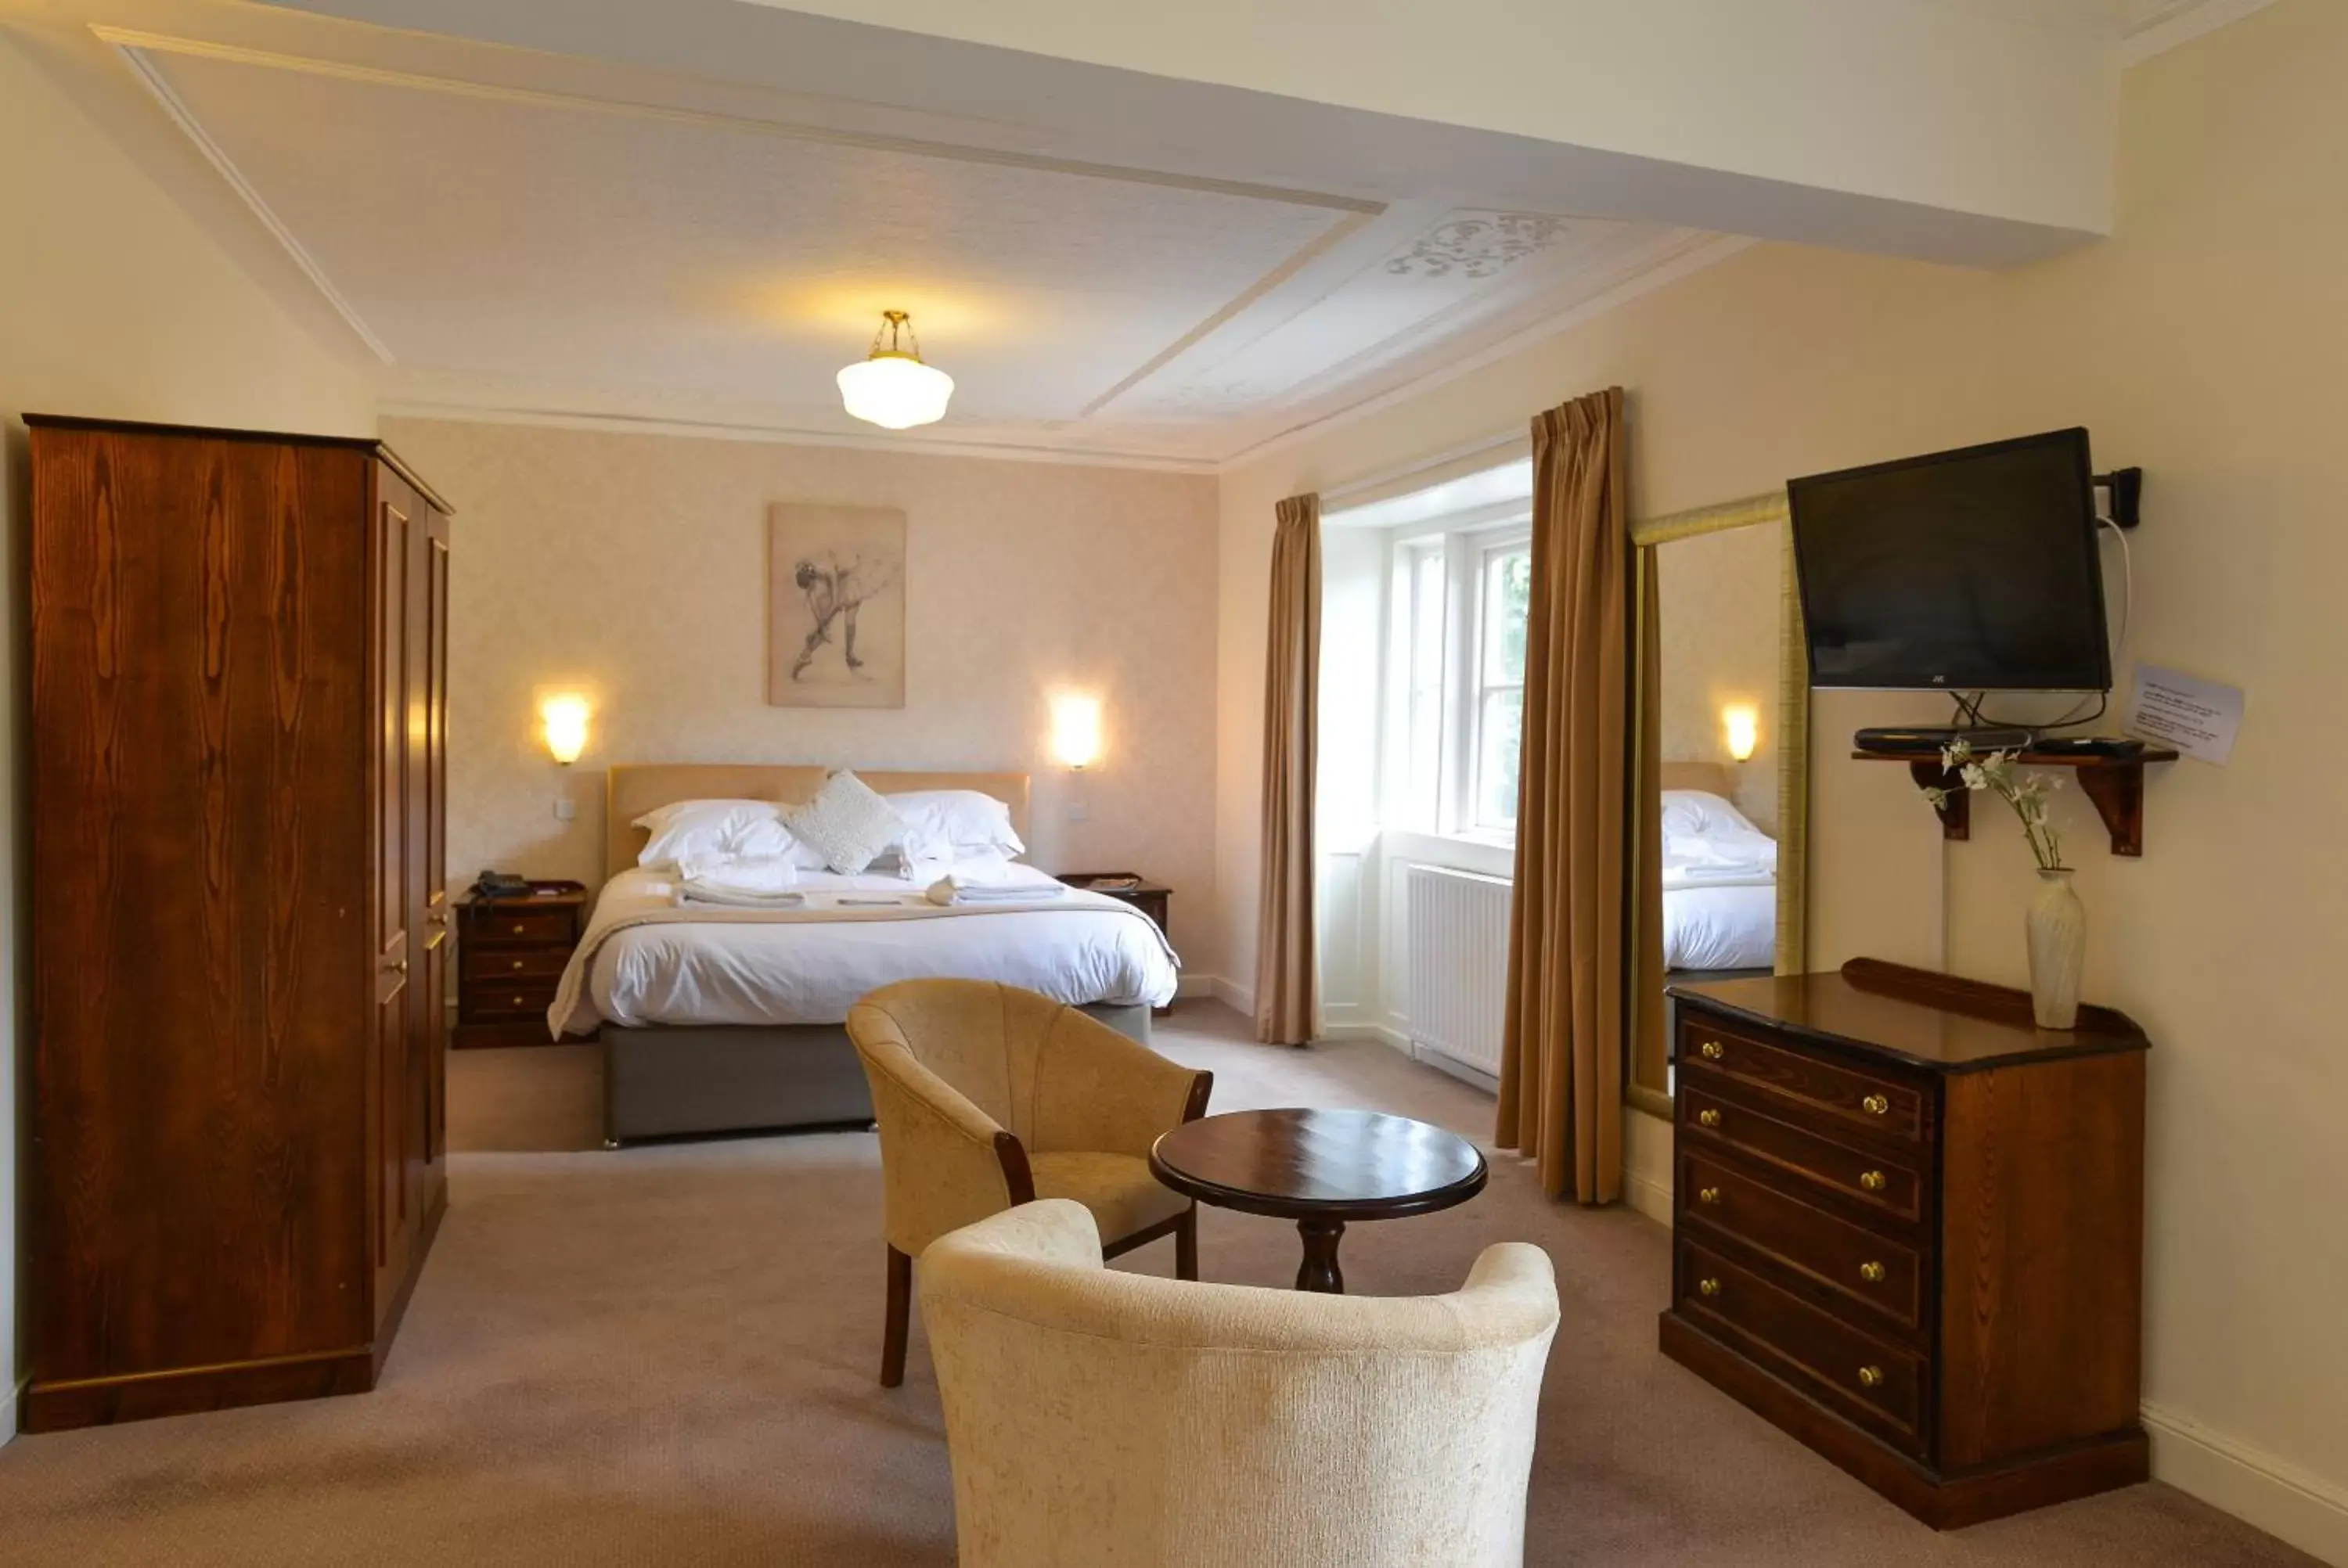 Bed, Room Photo in Steeton Hall Hotel & Restaurant